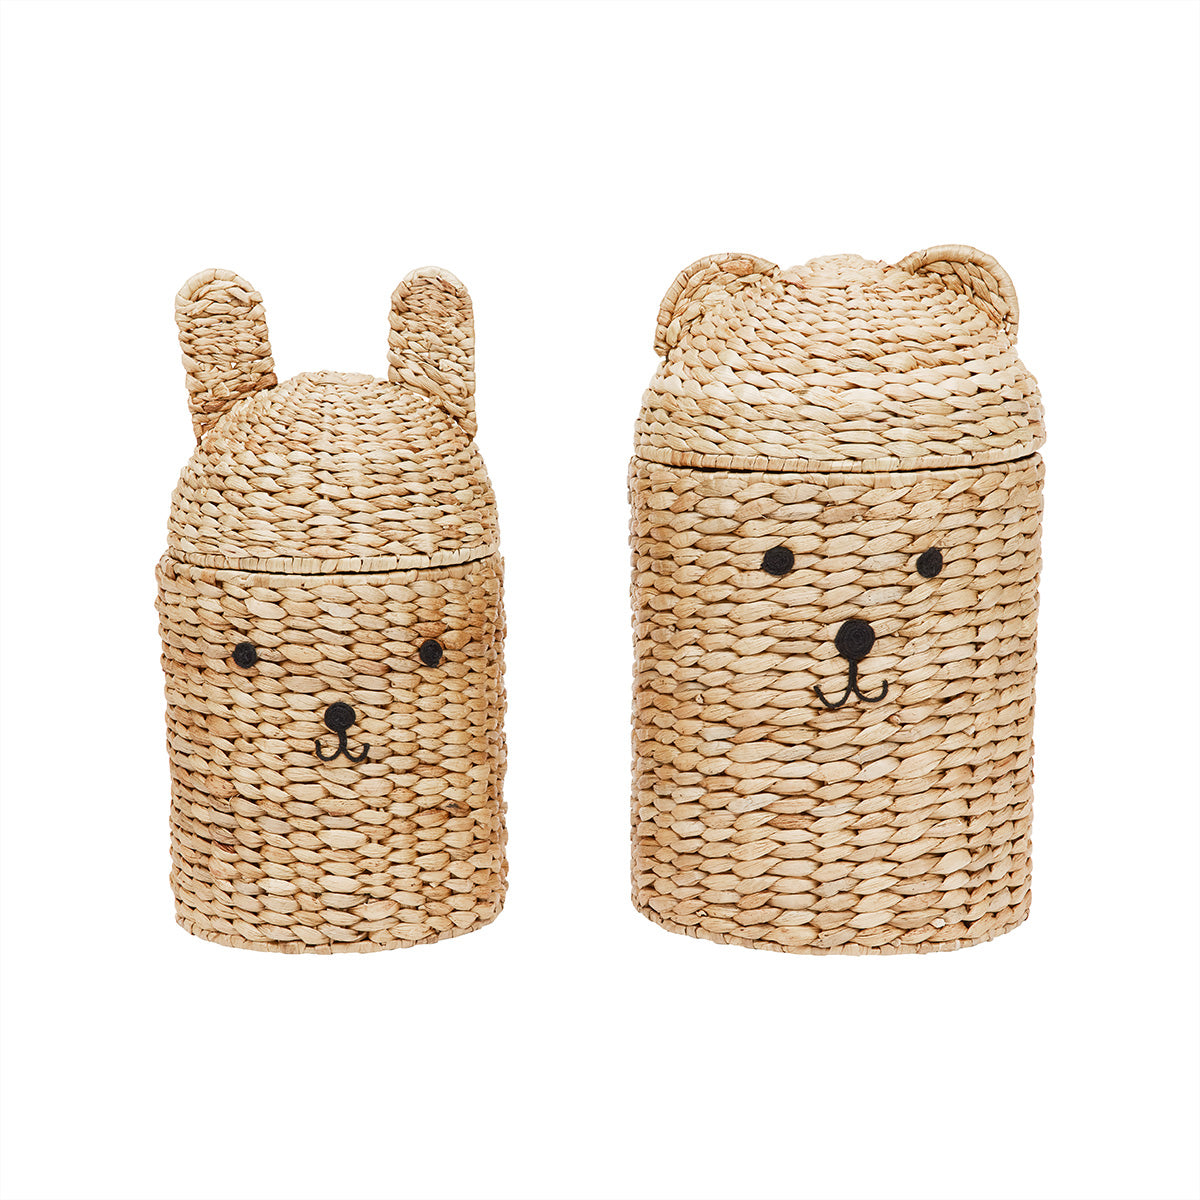 OYOY MINI Bear & Rabbit Storage Basket - Set of 2 Basket 901 Nature